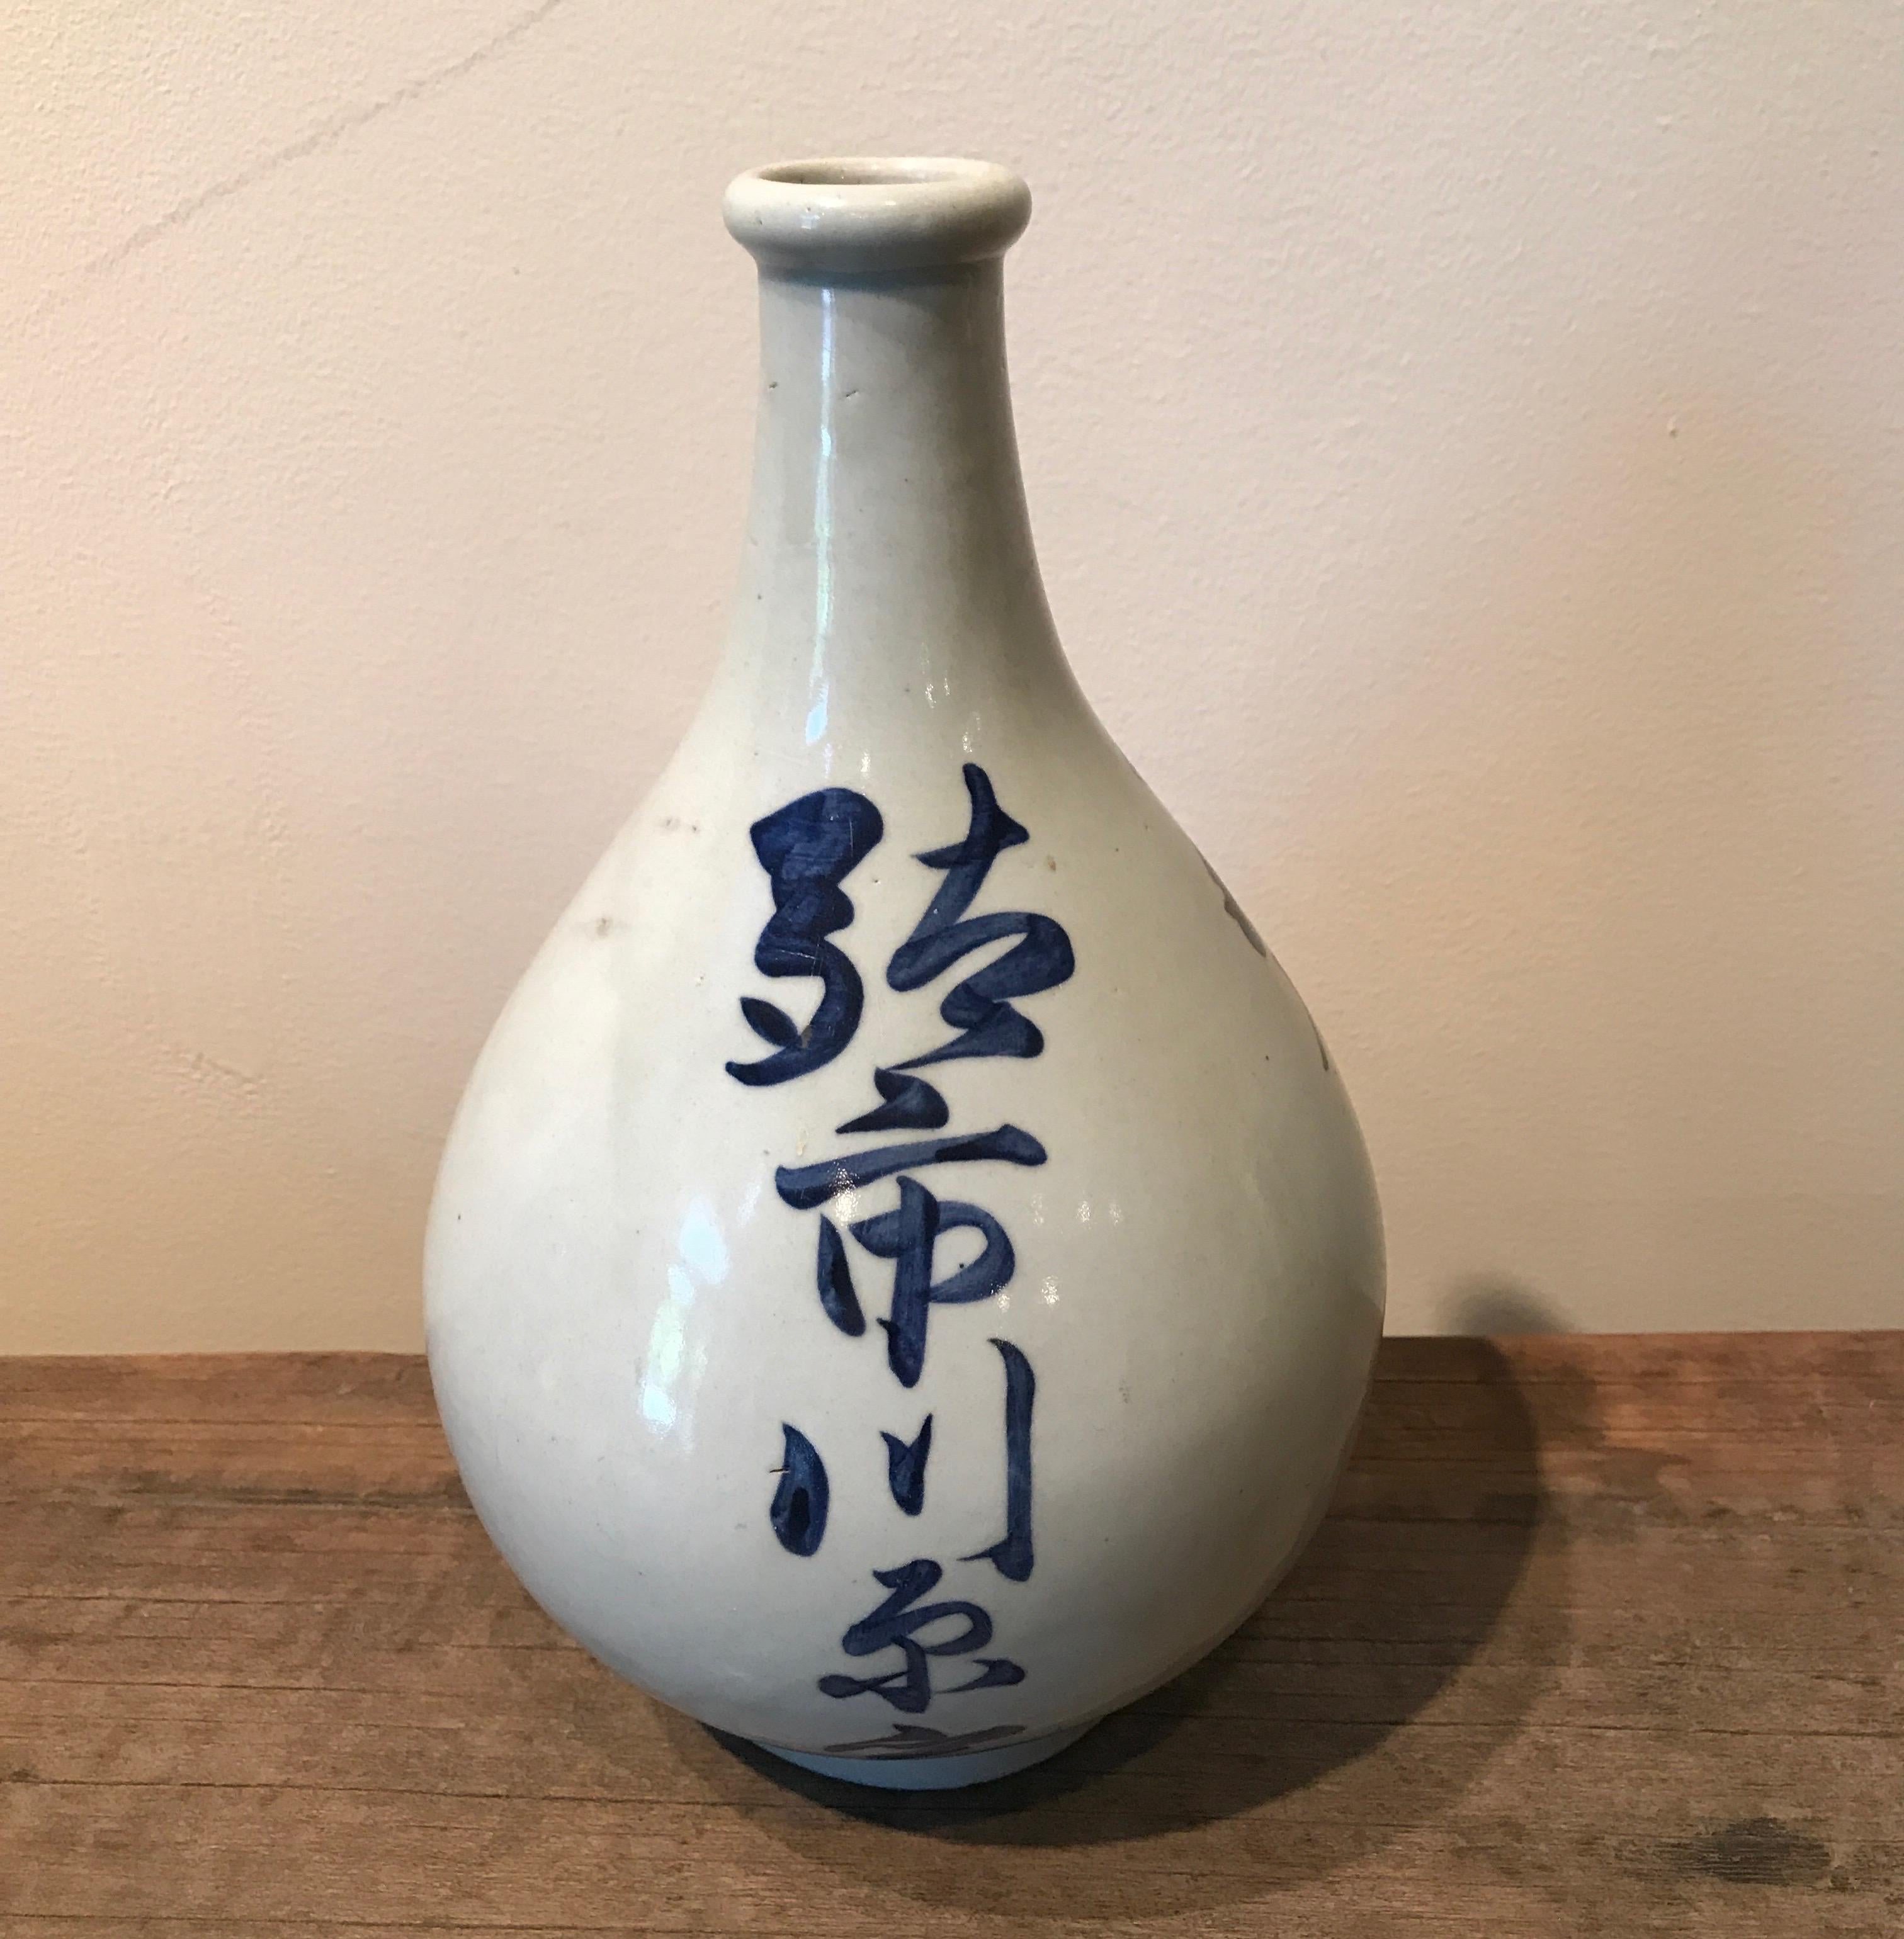 Glazed Vintage Japanese Sake Bottle with Hand Painted Calligraphy